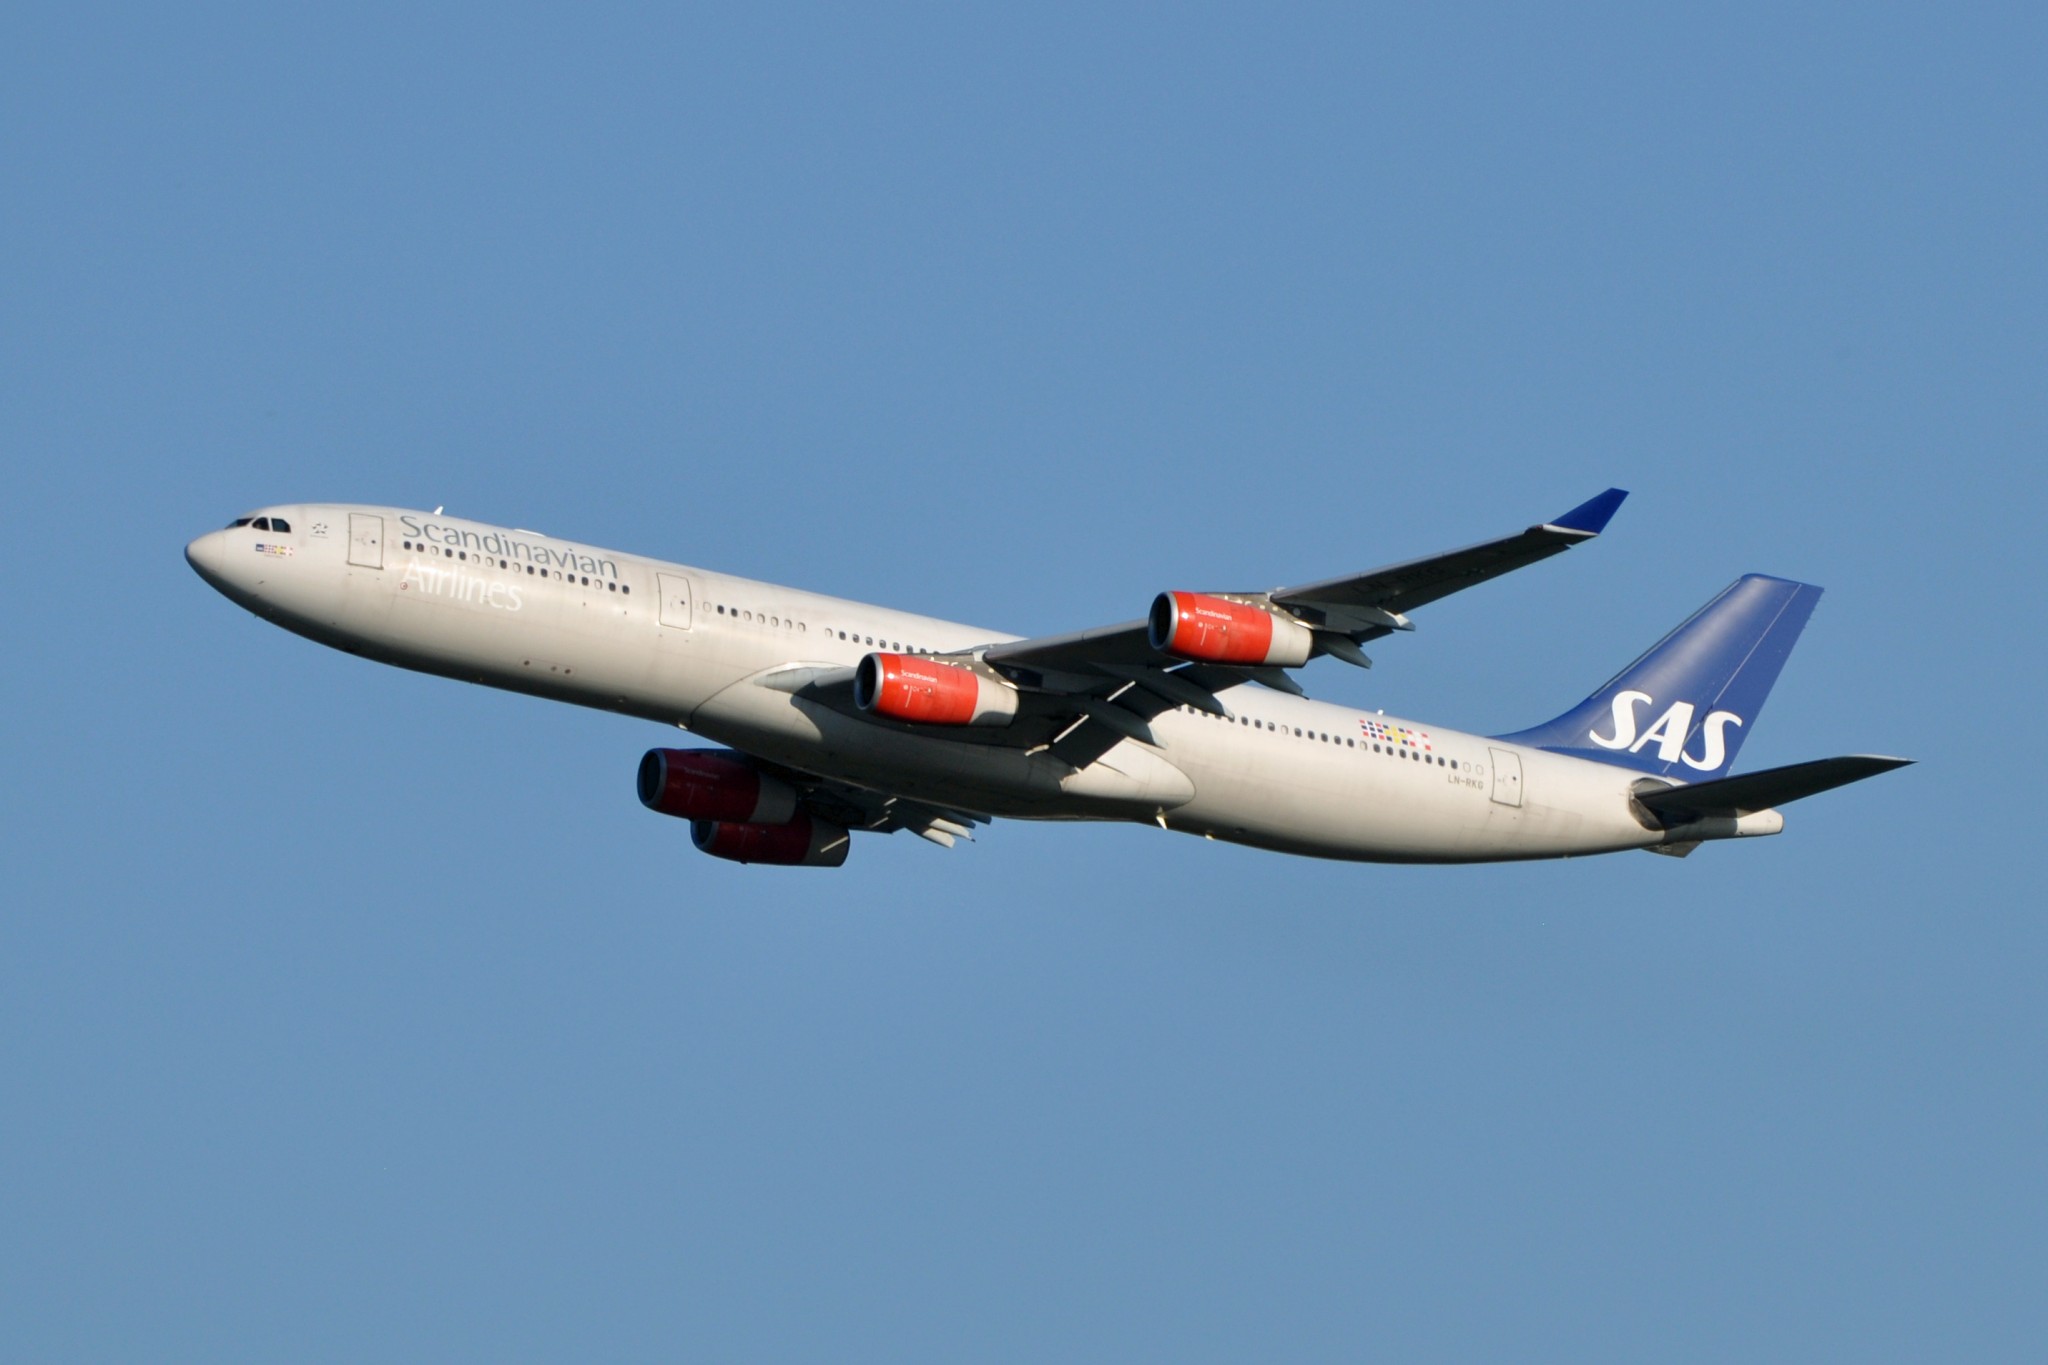 SAS flew almost 1.5 million passengers in December